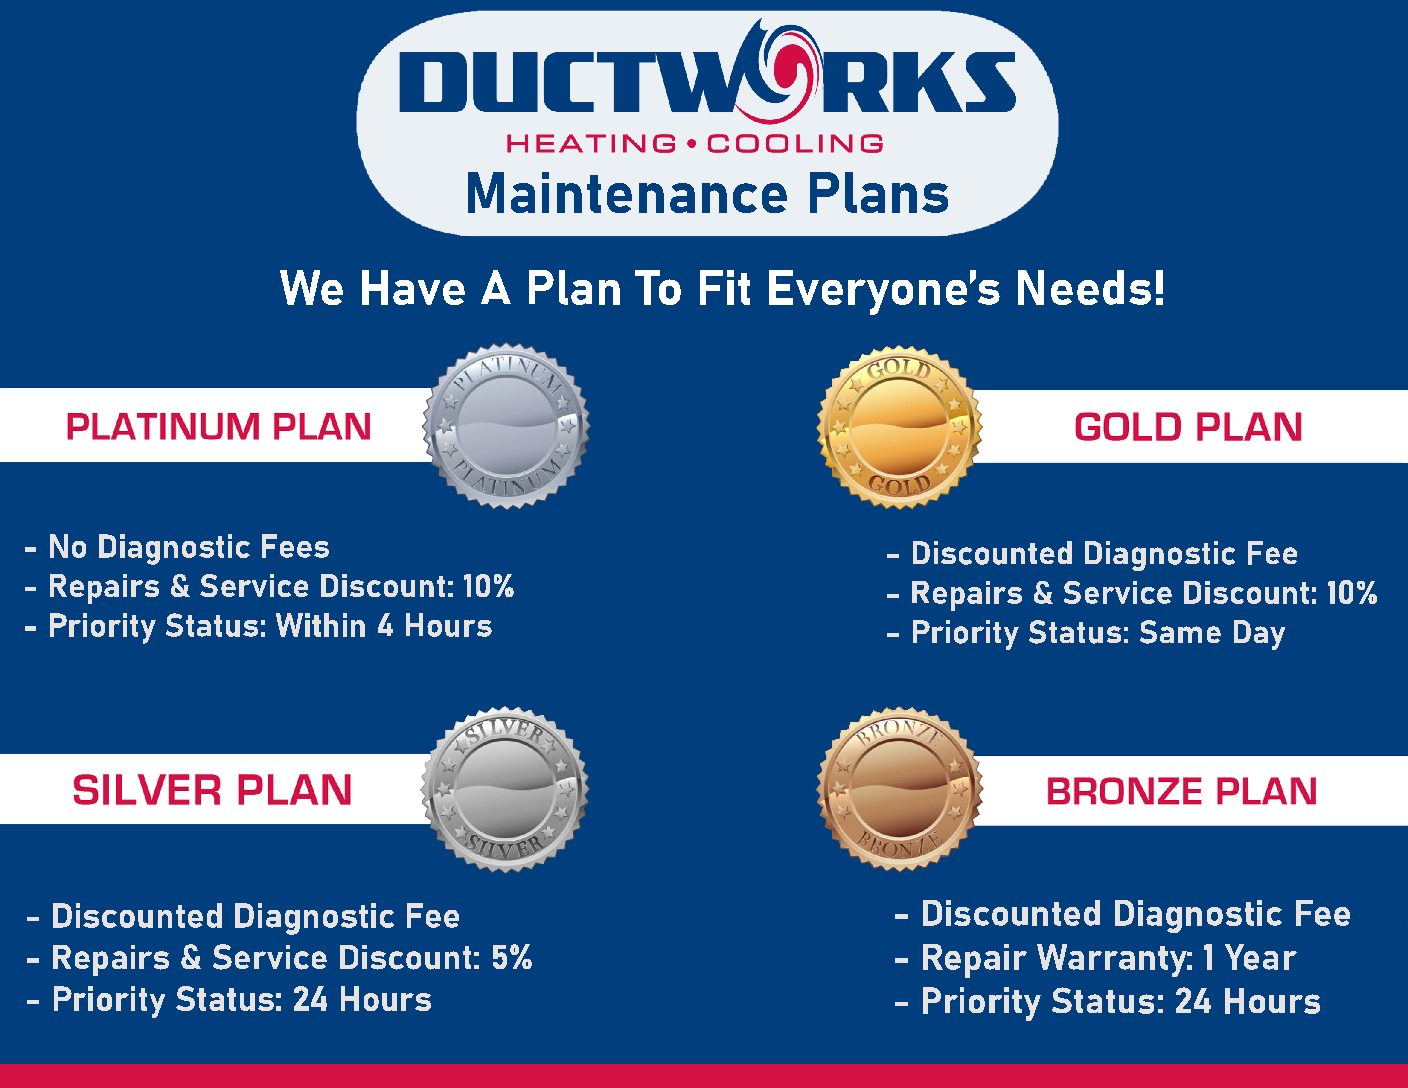 Ductworks Maintenance Plans infographic